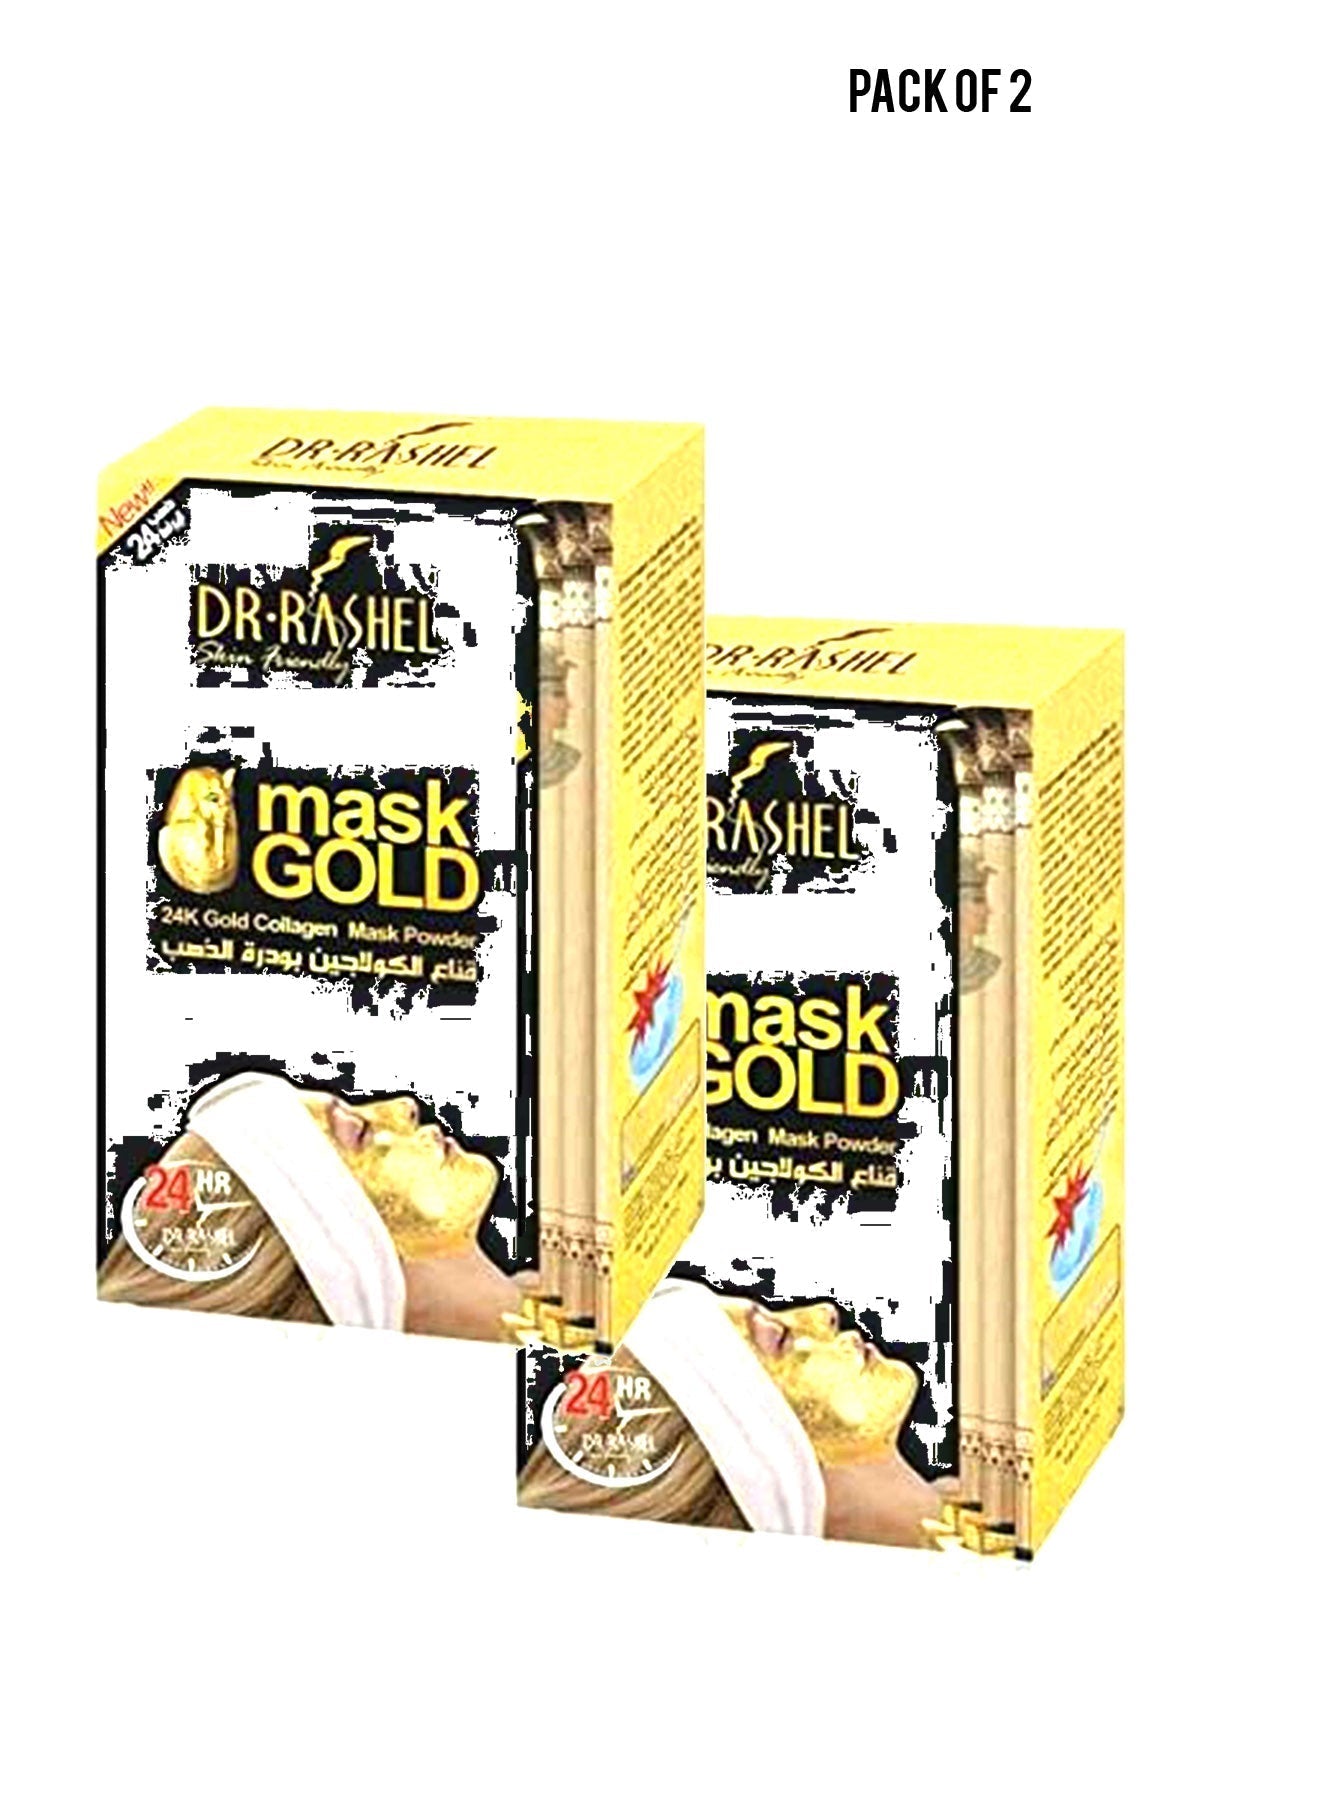 Dr Rashel 24k Gold Collagen Mask powder 300g Value Pack of 2 